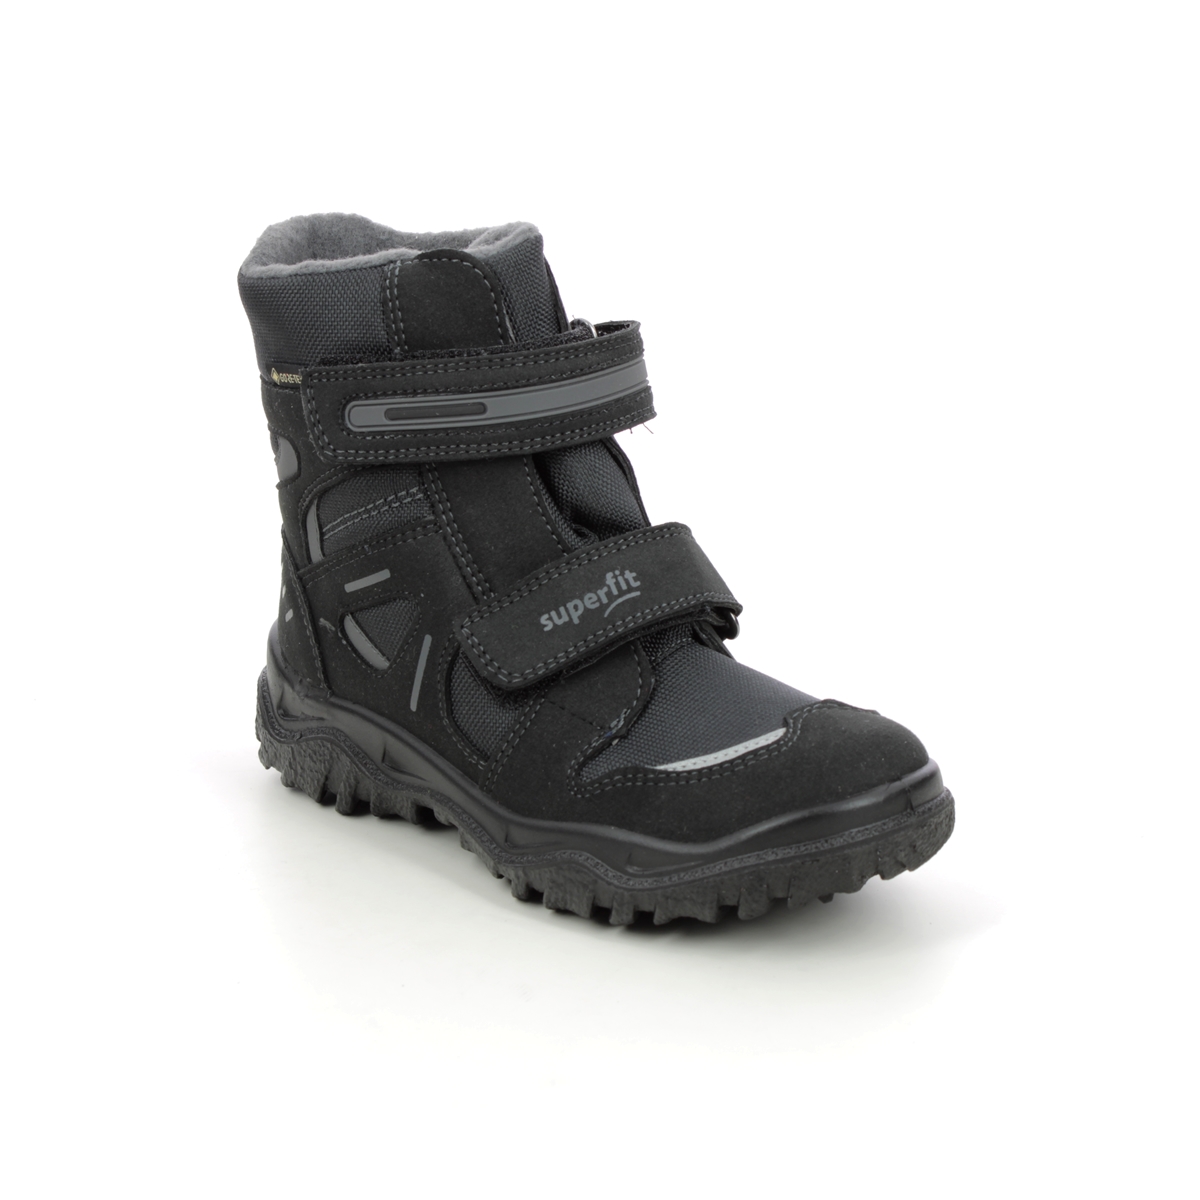 Superfit Husky Jnr Gore Black Kids Boys Boots 0809080-0600 In Size 28 In Plain Black For kids